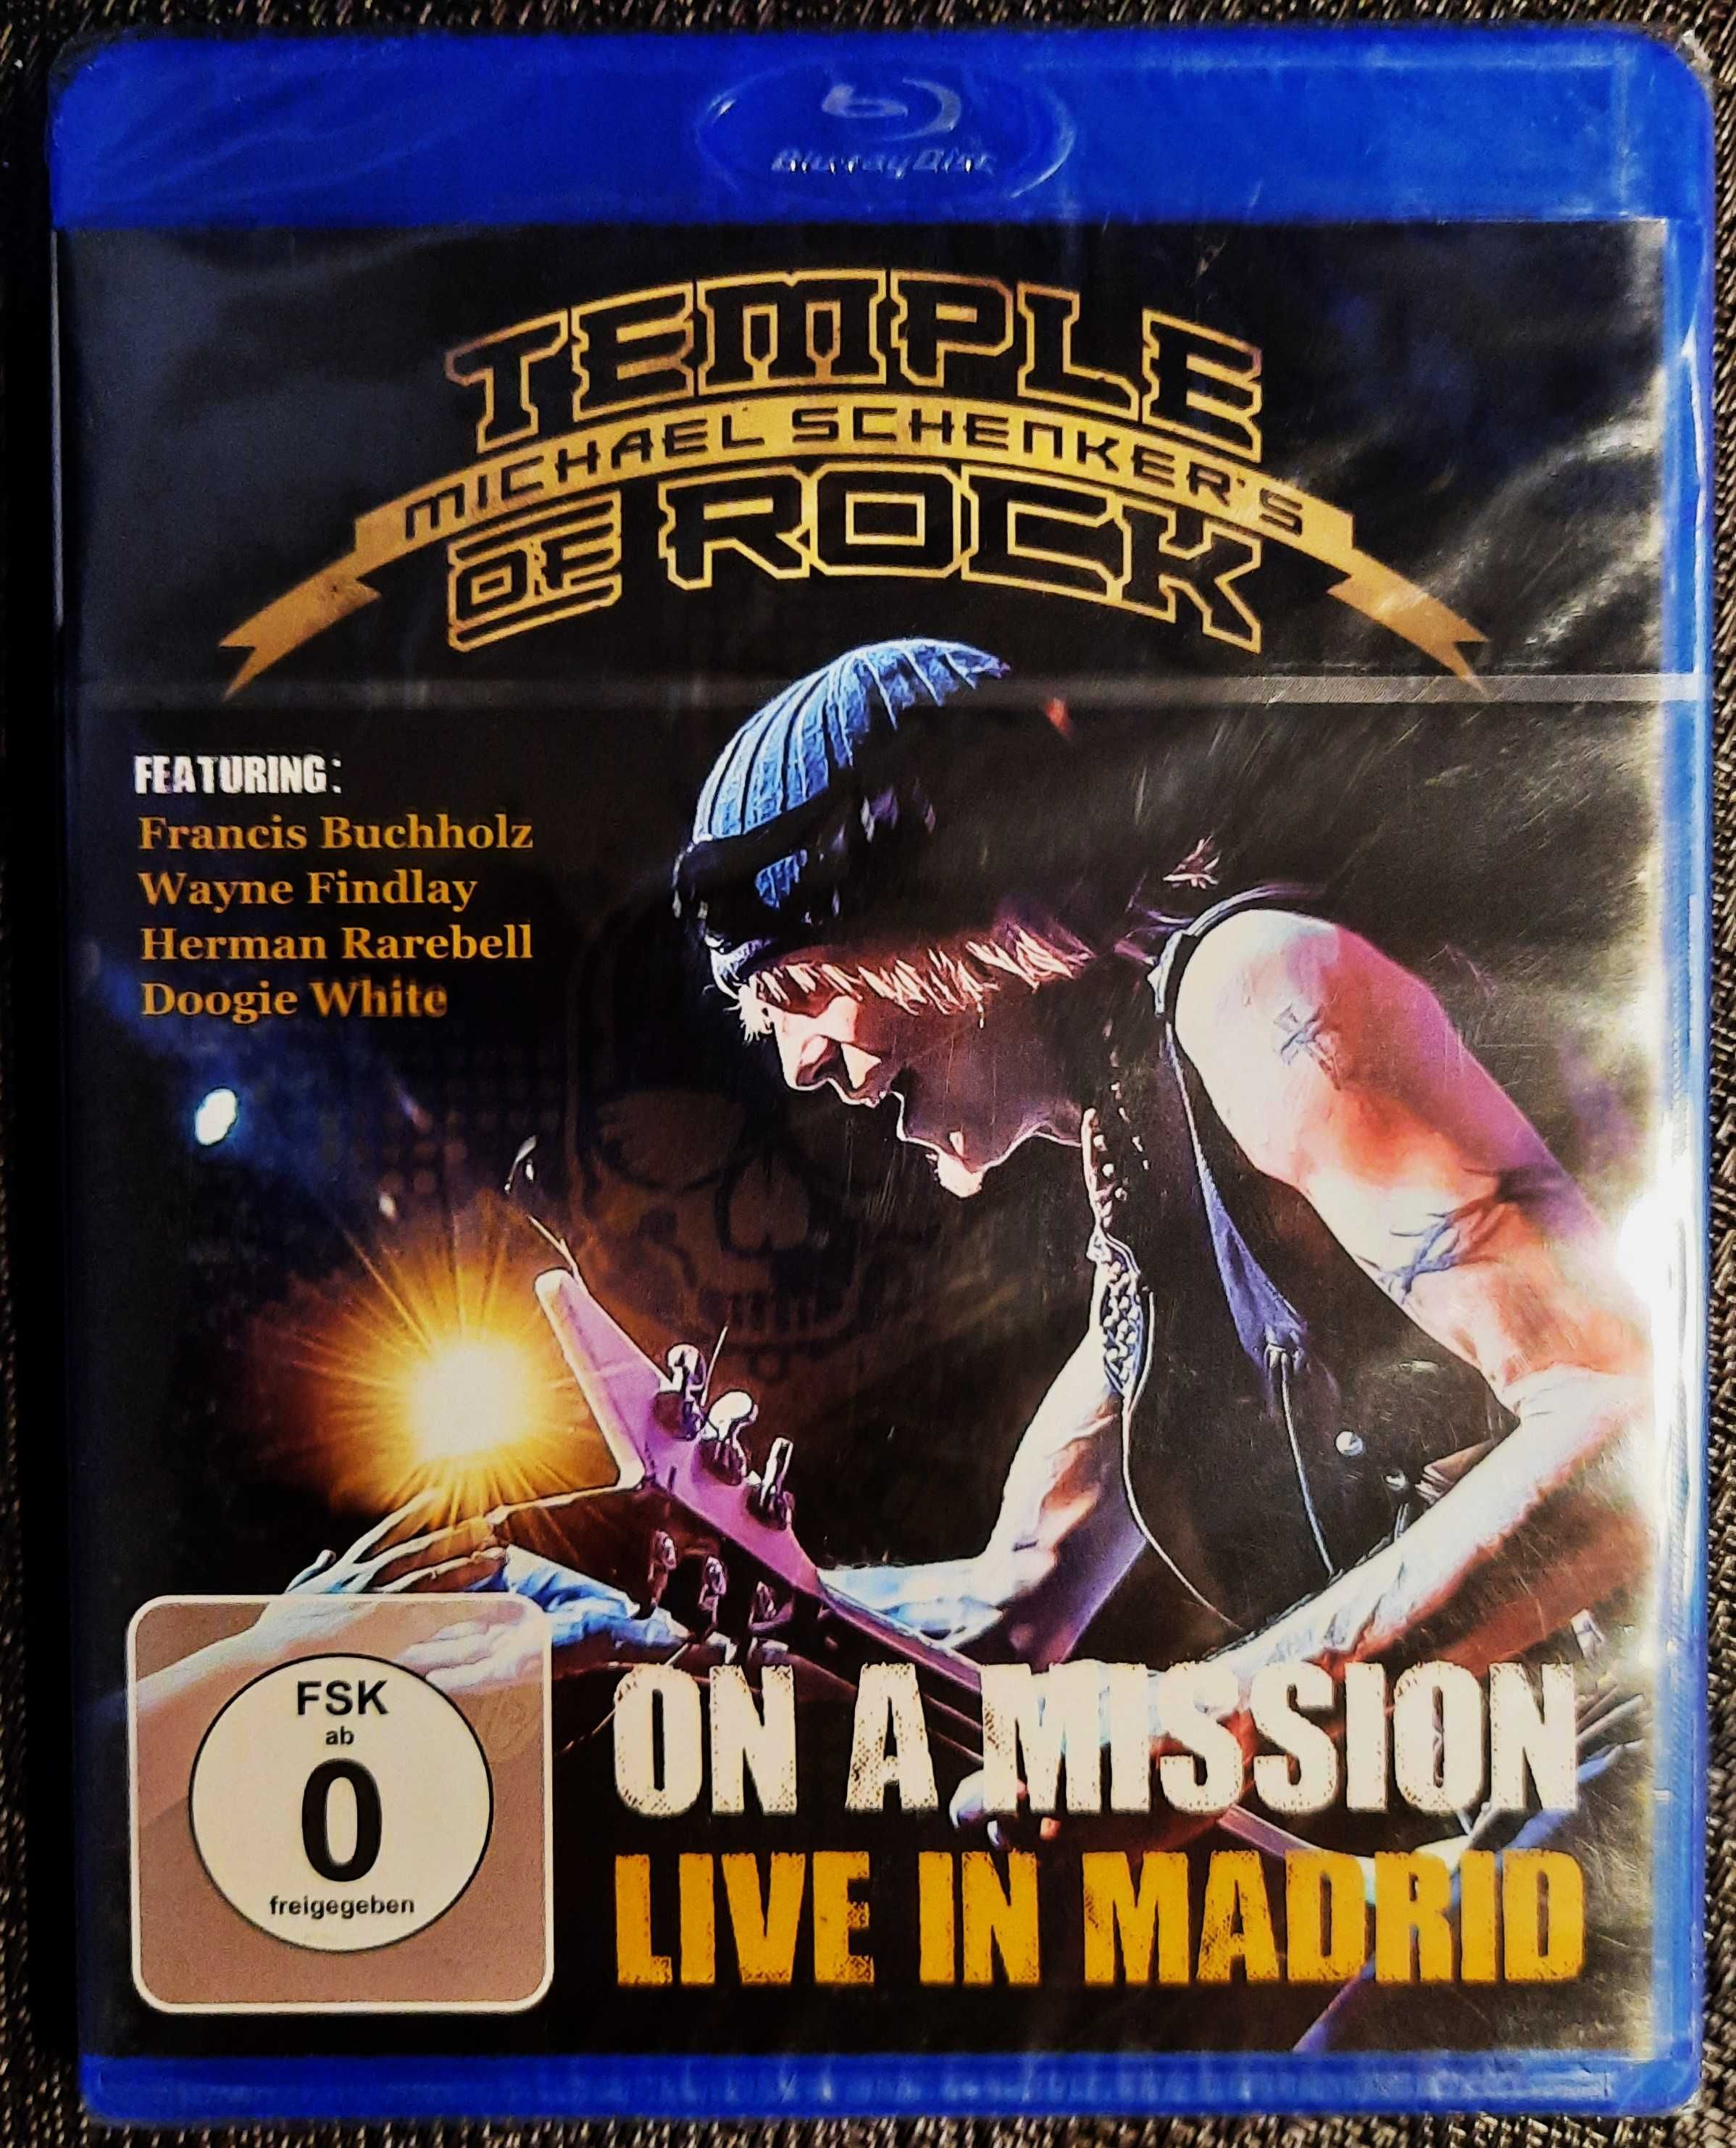 Polecam Rewelacyjny Koncert Legenda Rocka Peter Frampton Live In USA